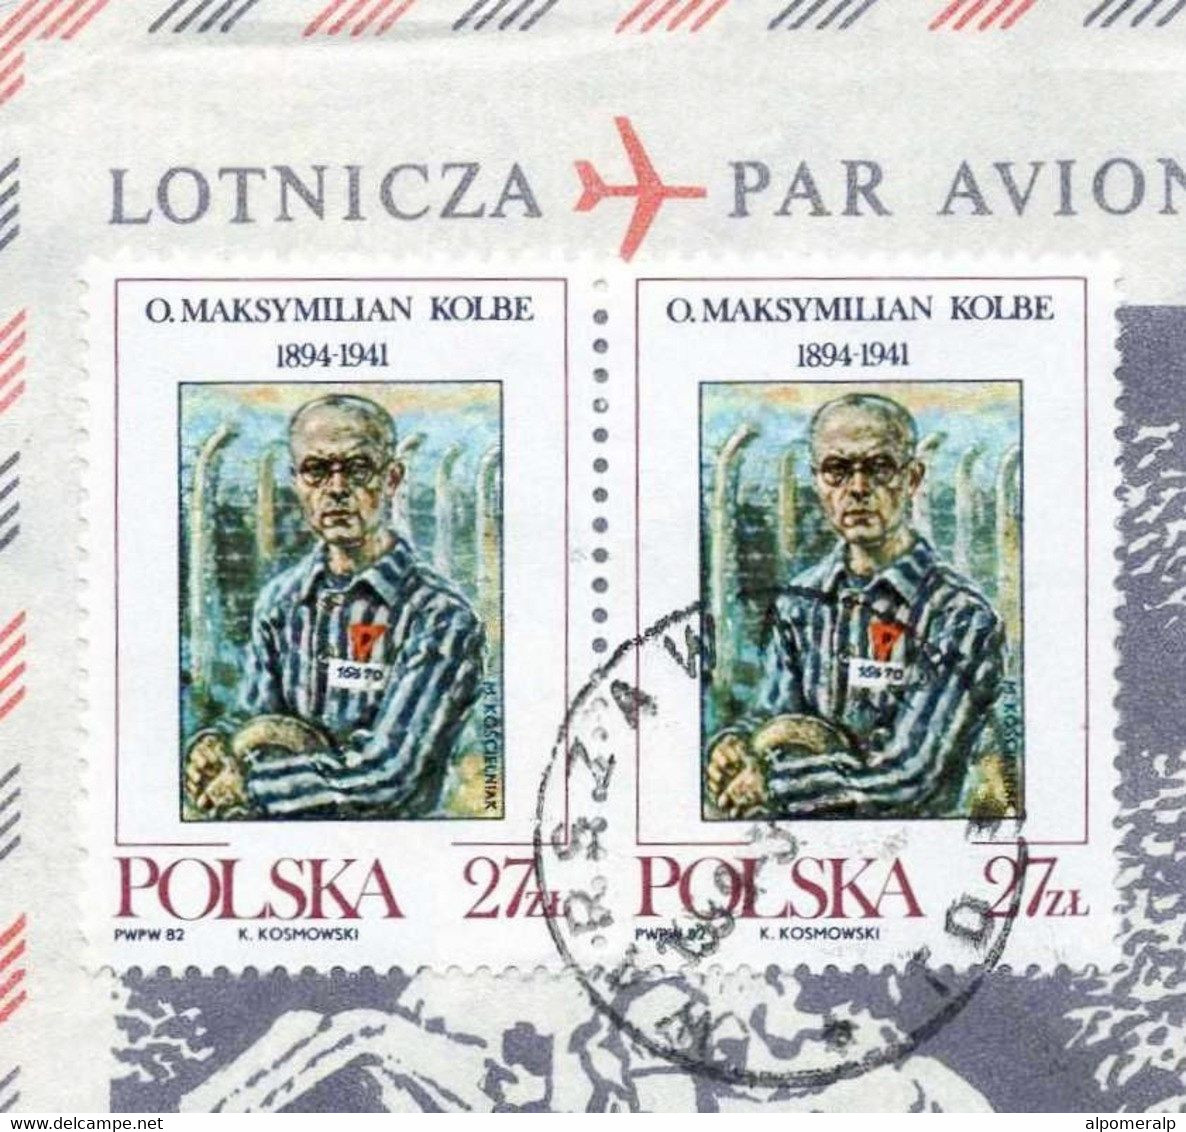 Poland Warszawa 1989 Aerogram Cover Used To Florida USA | WWII Medal | Maximilian Maria Kolbe, Polish Catholic Priest - Aviones